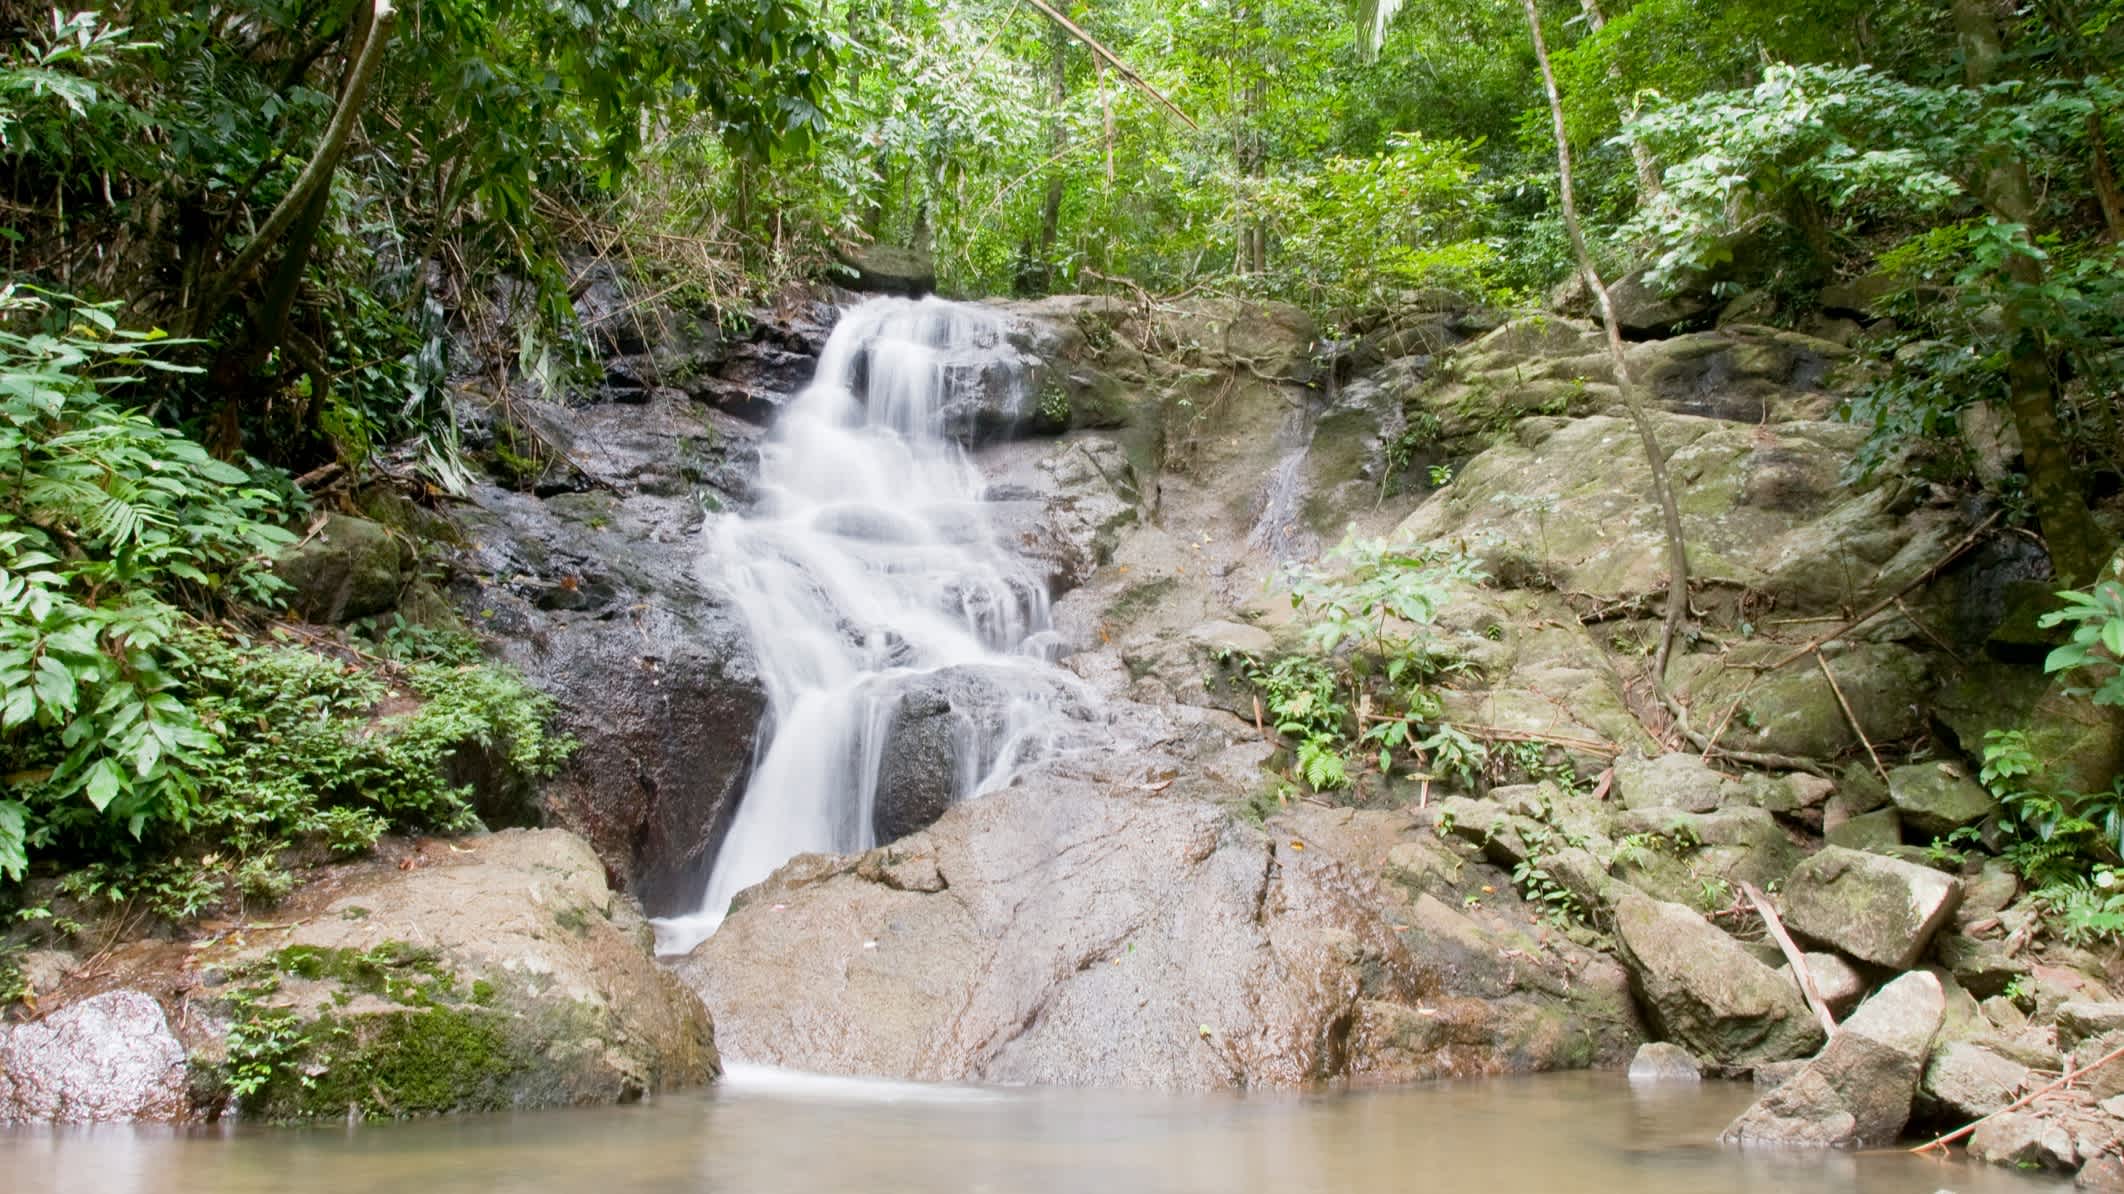 Kathu Wasserfall in Phuket, Thailand

